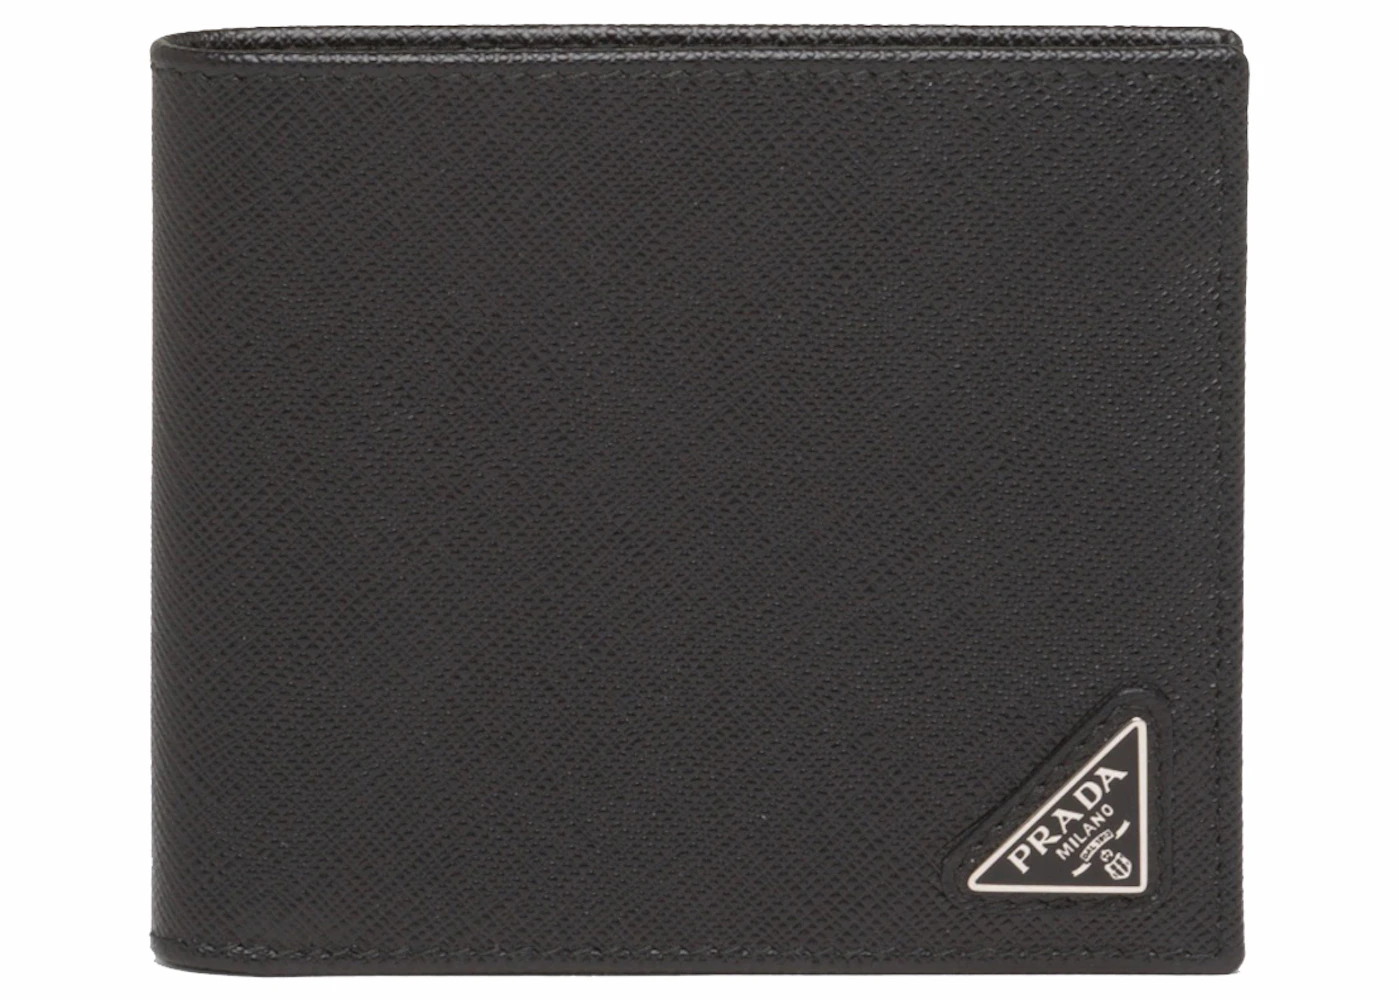 Prada Saffiano Leather Bi-Fold Wallet Black in Saffiano Leather with ...